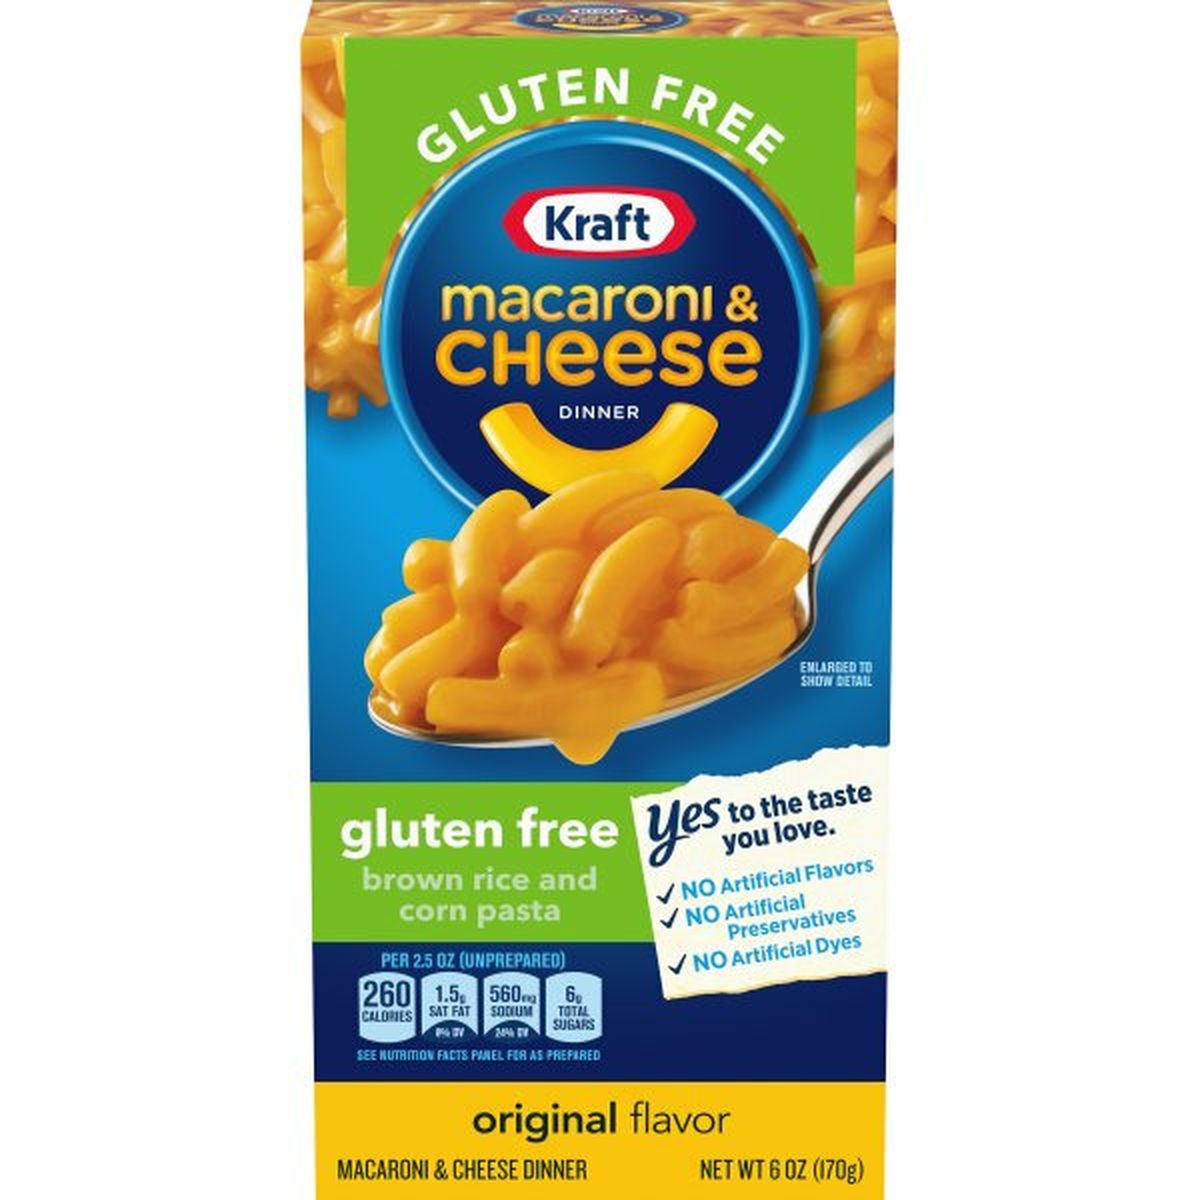 Calories in Kraft Gluten Free Original Flavor Macaroni & Cheese Dinner